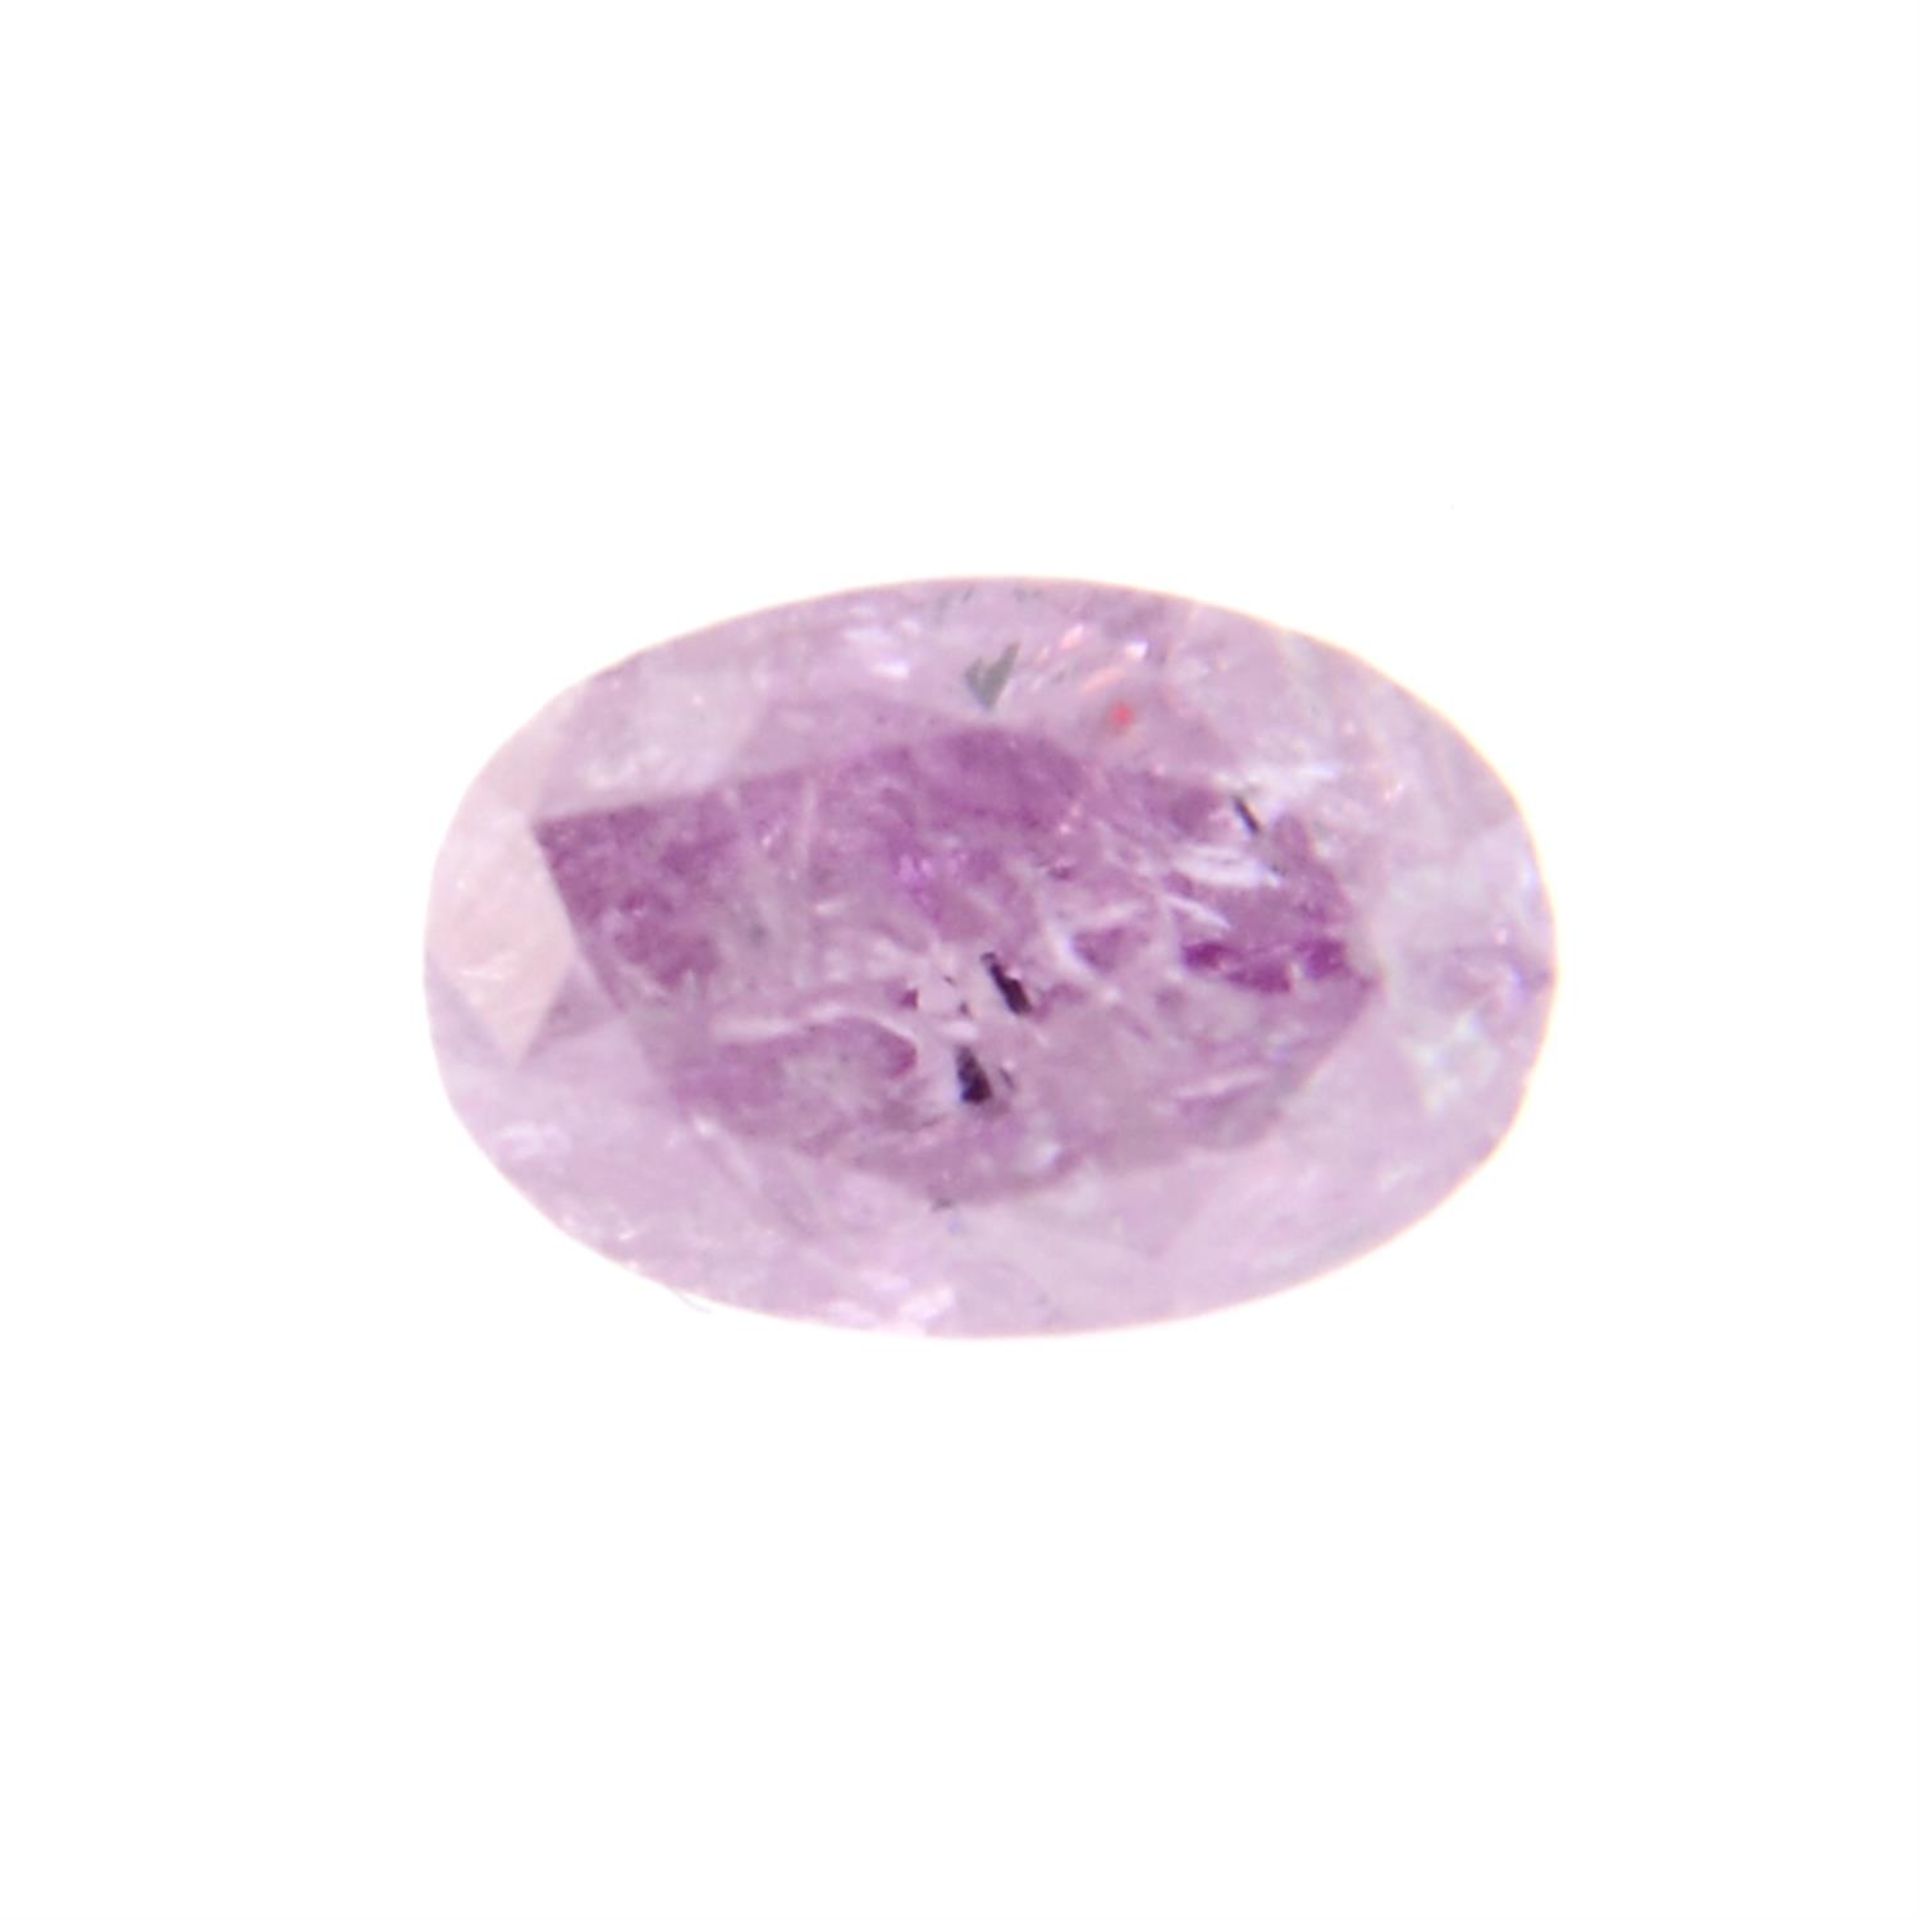 An oval shape natural fancy intense purplish pink diamond, weighing 0.36ct.